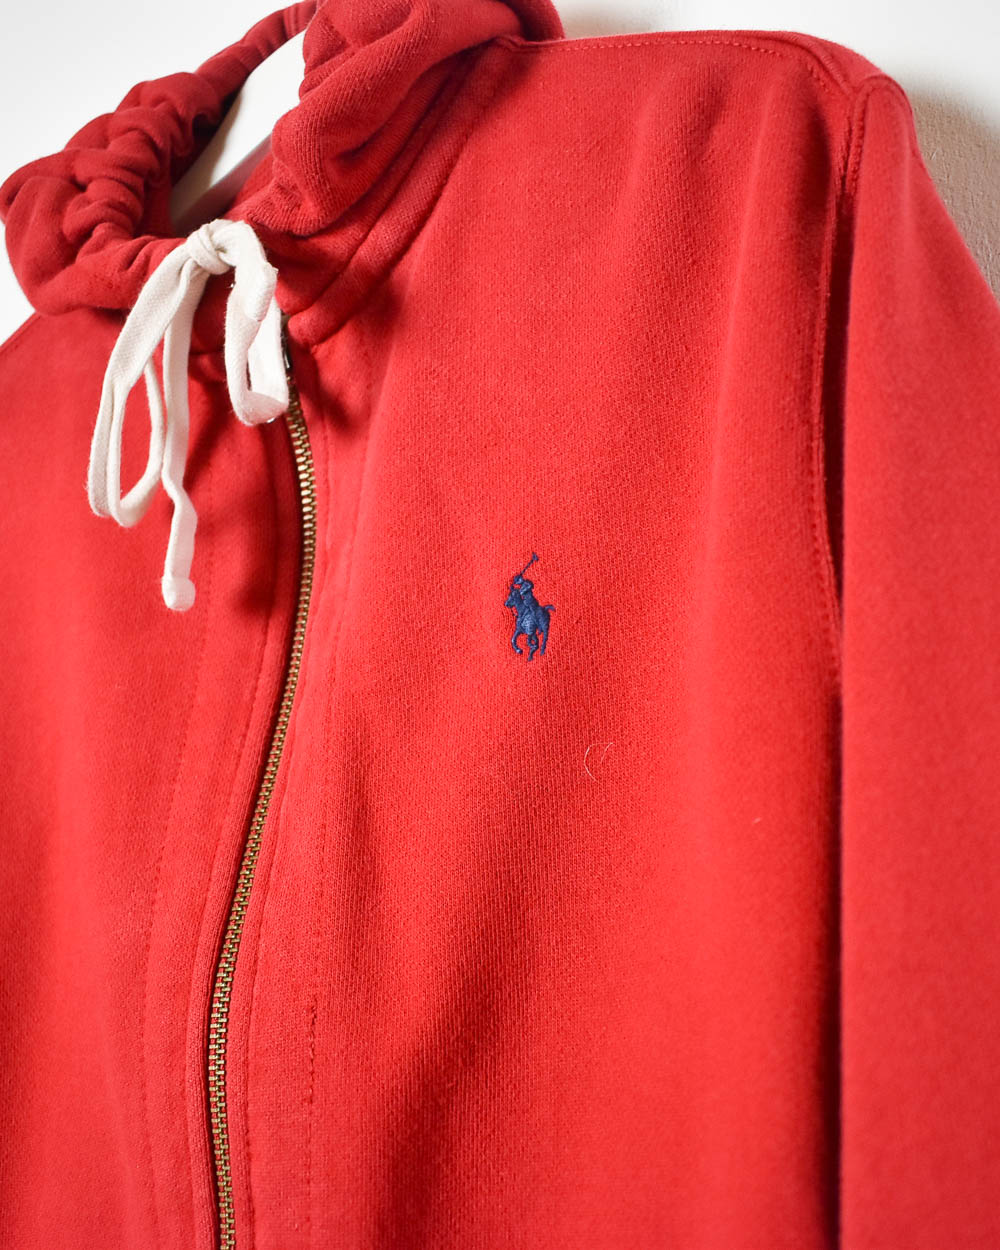 Polo Ralph Lauren Jeans Red Zip Hoodie - 5 Star Vintage